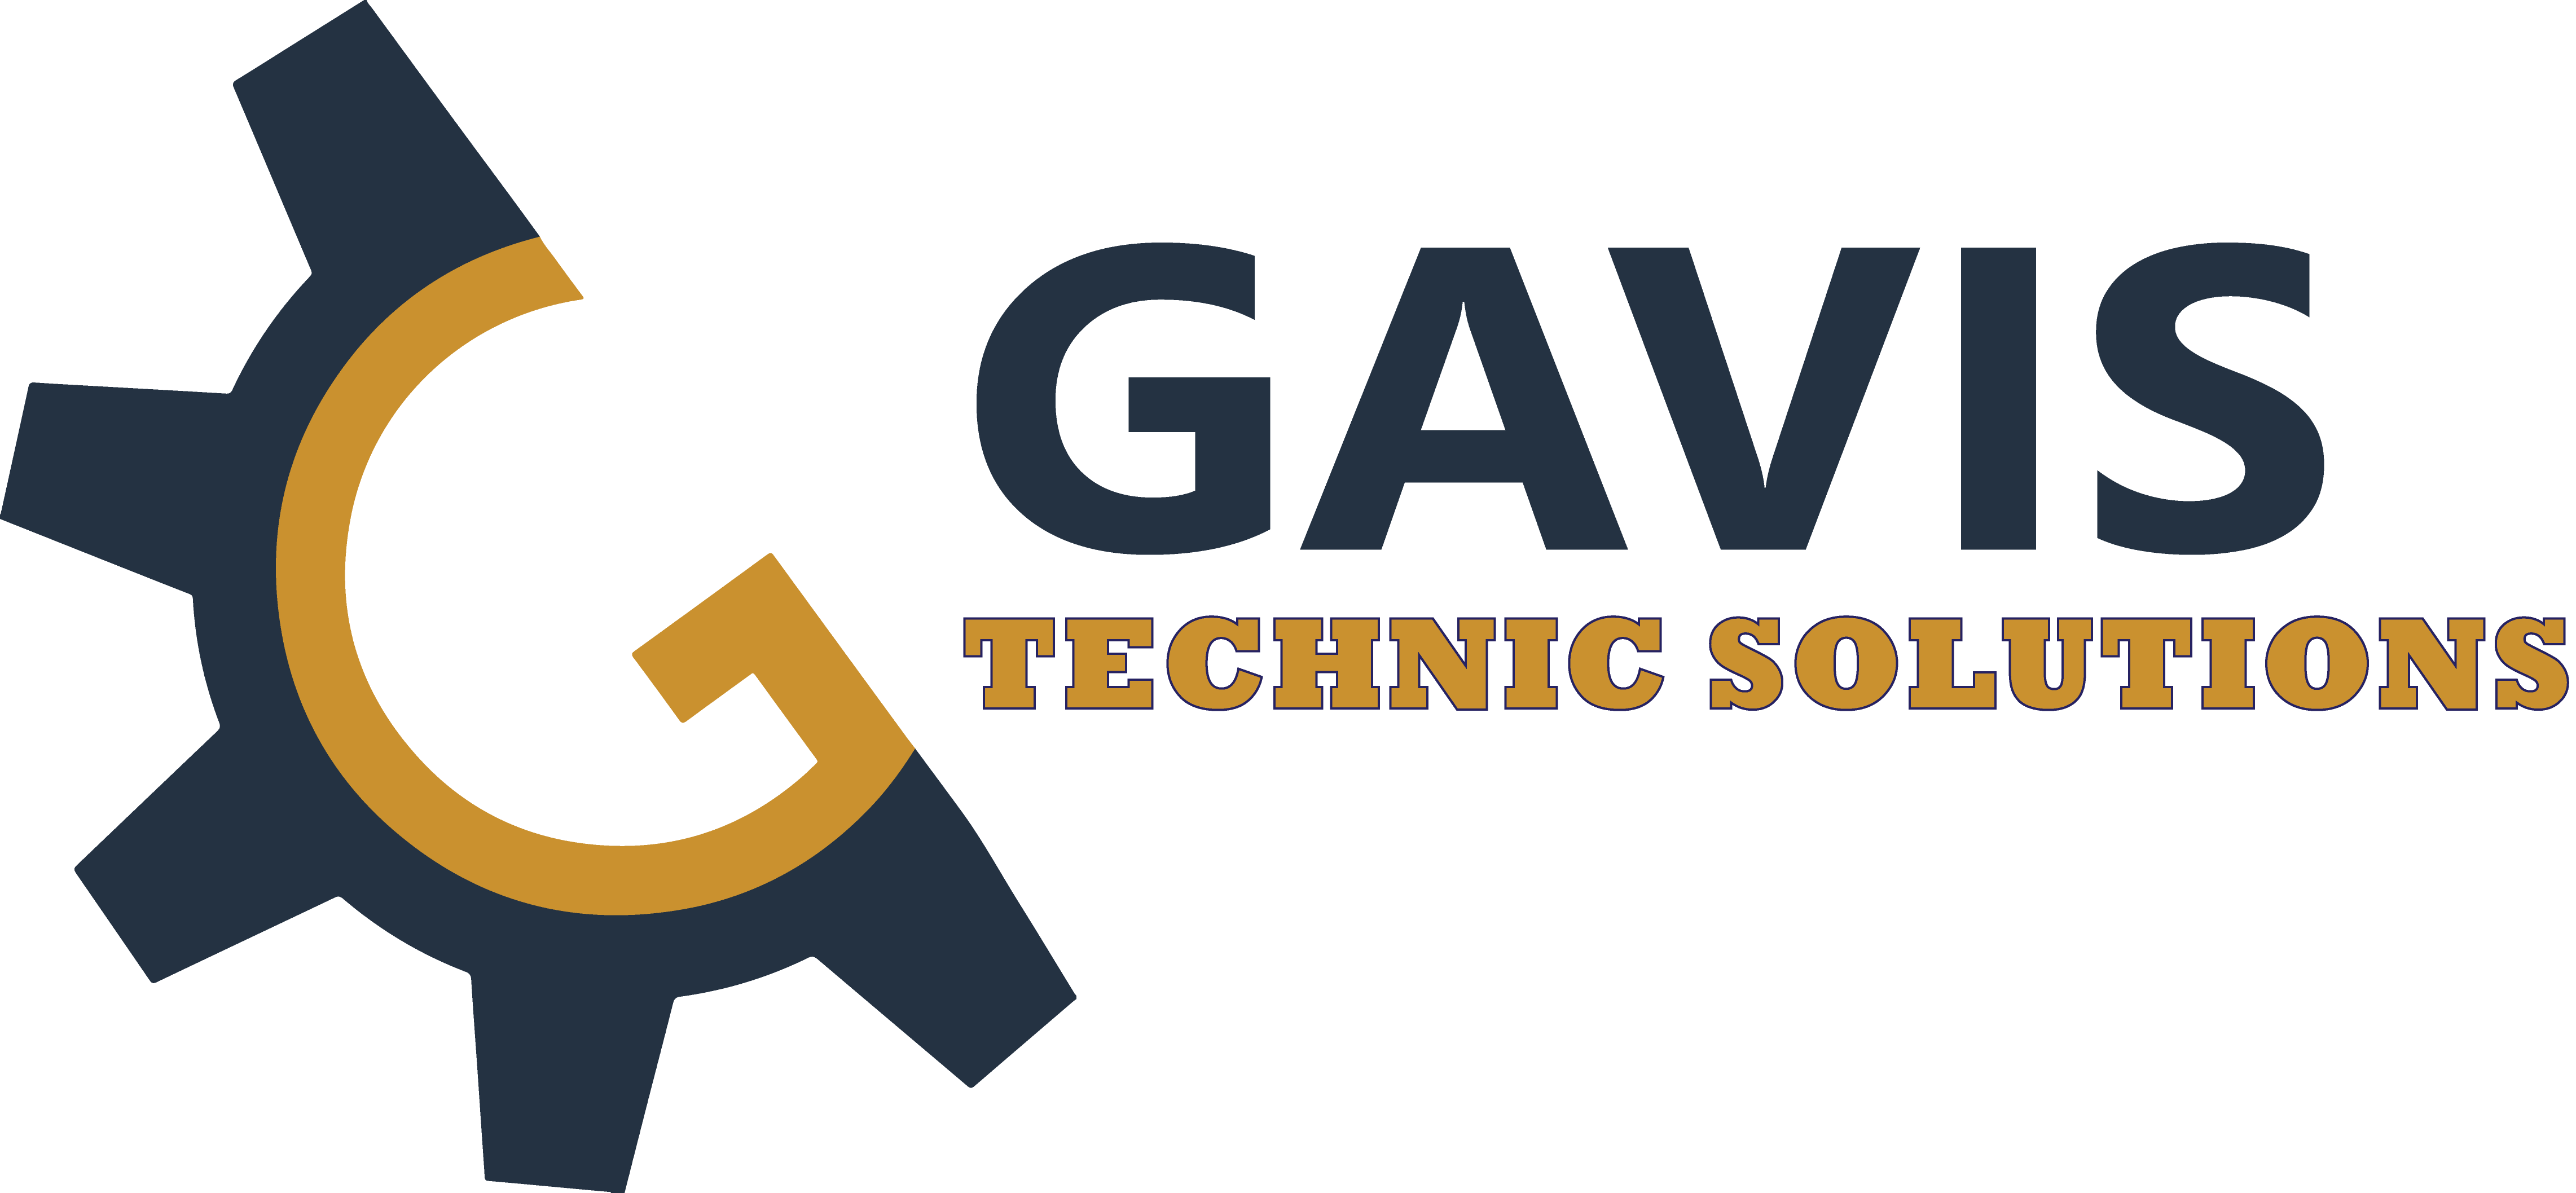 GAVIS TECHNIC SOLUTIONS